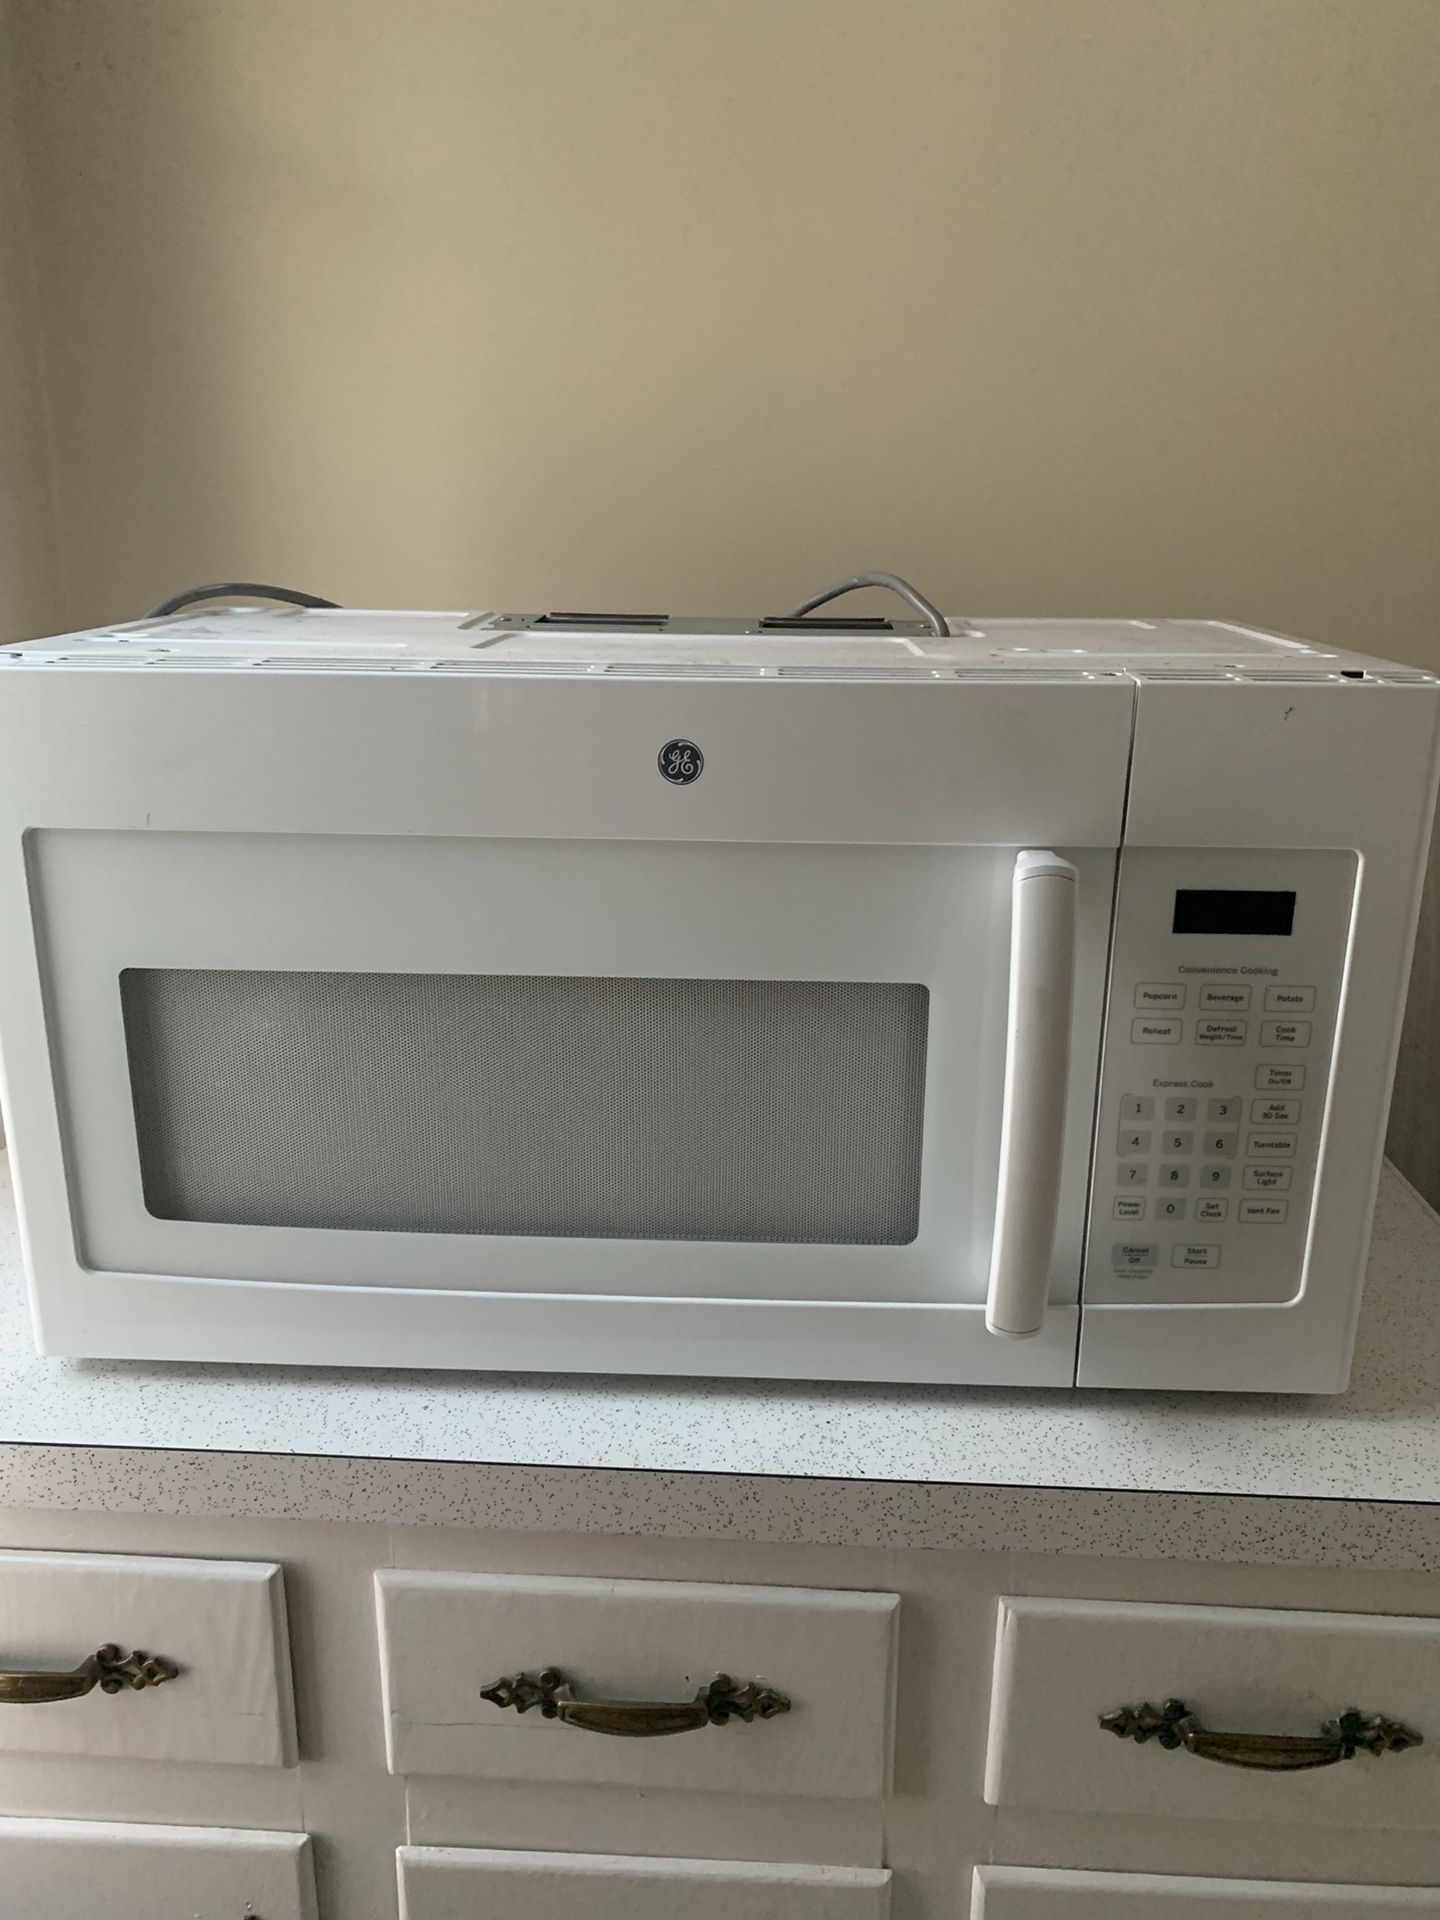 GE overhead kitchen microwave